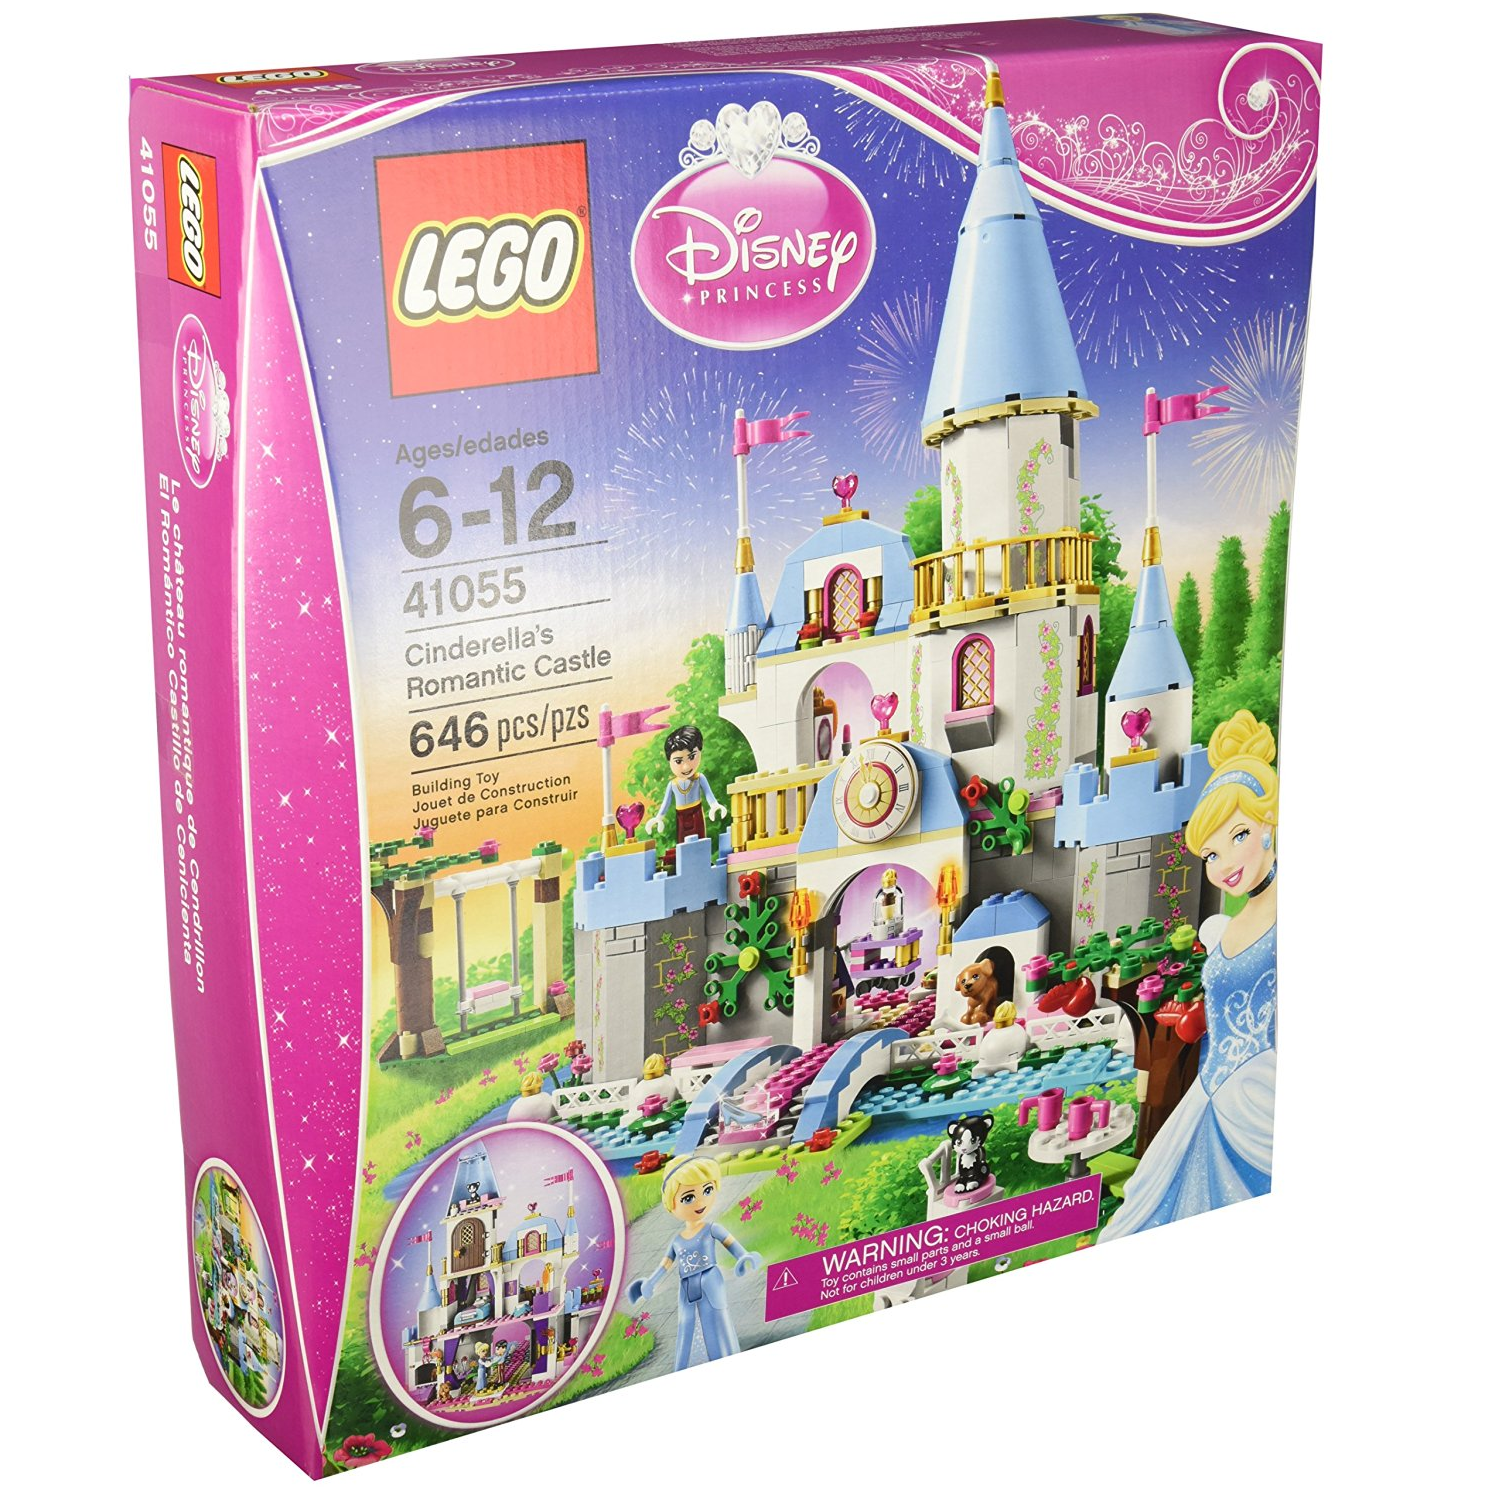 LEGO Disney Princess Cinderella’s Romantic Castle Only $54.99 Shipped!